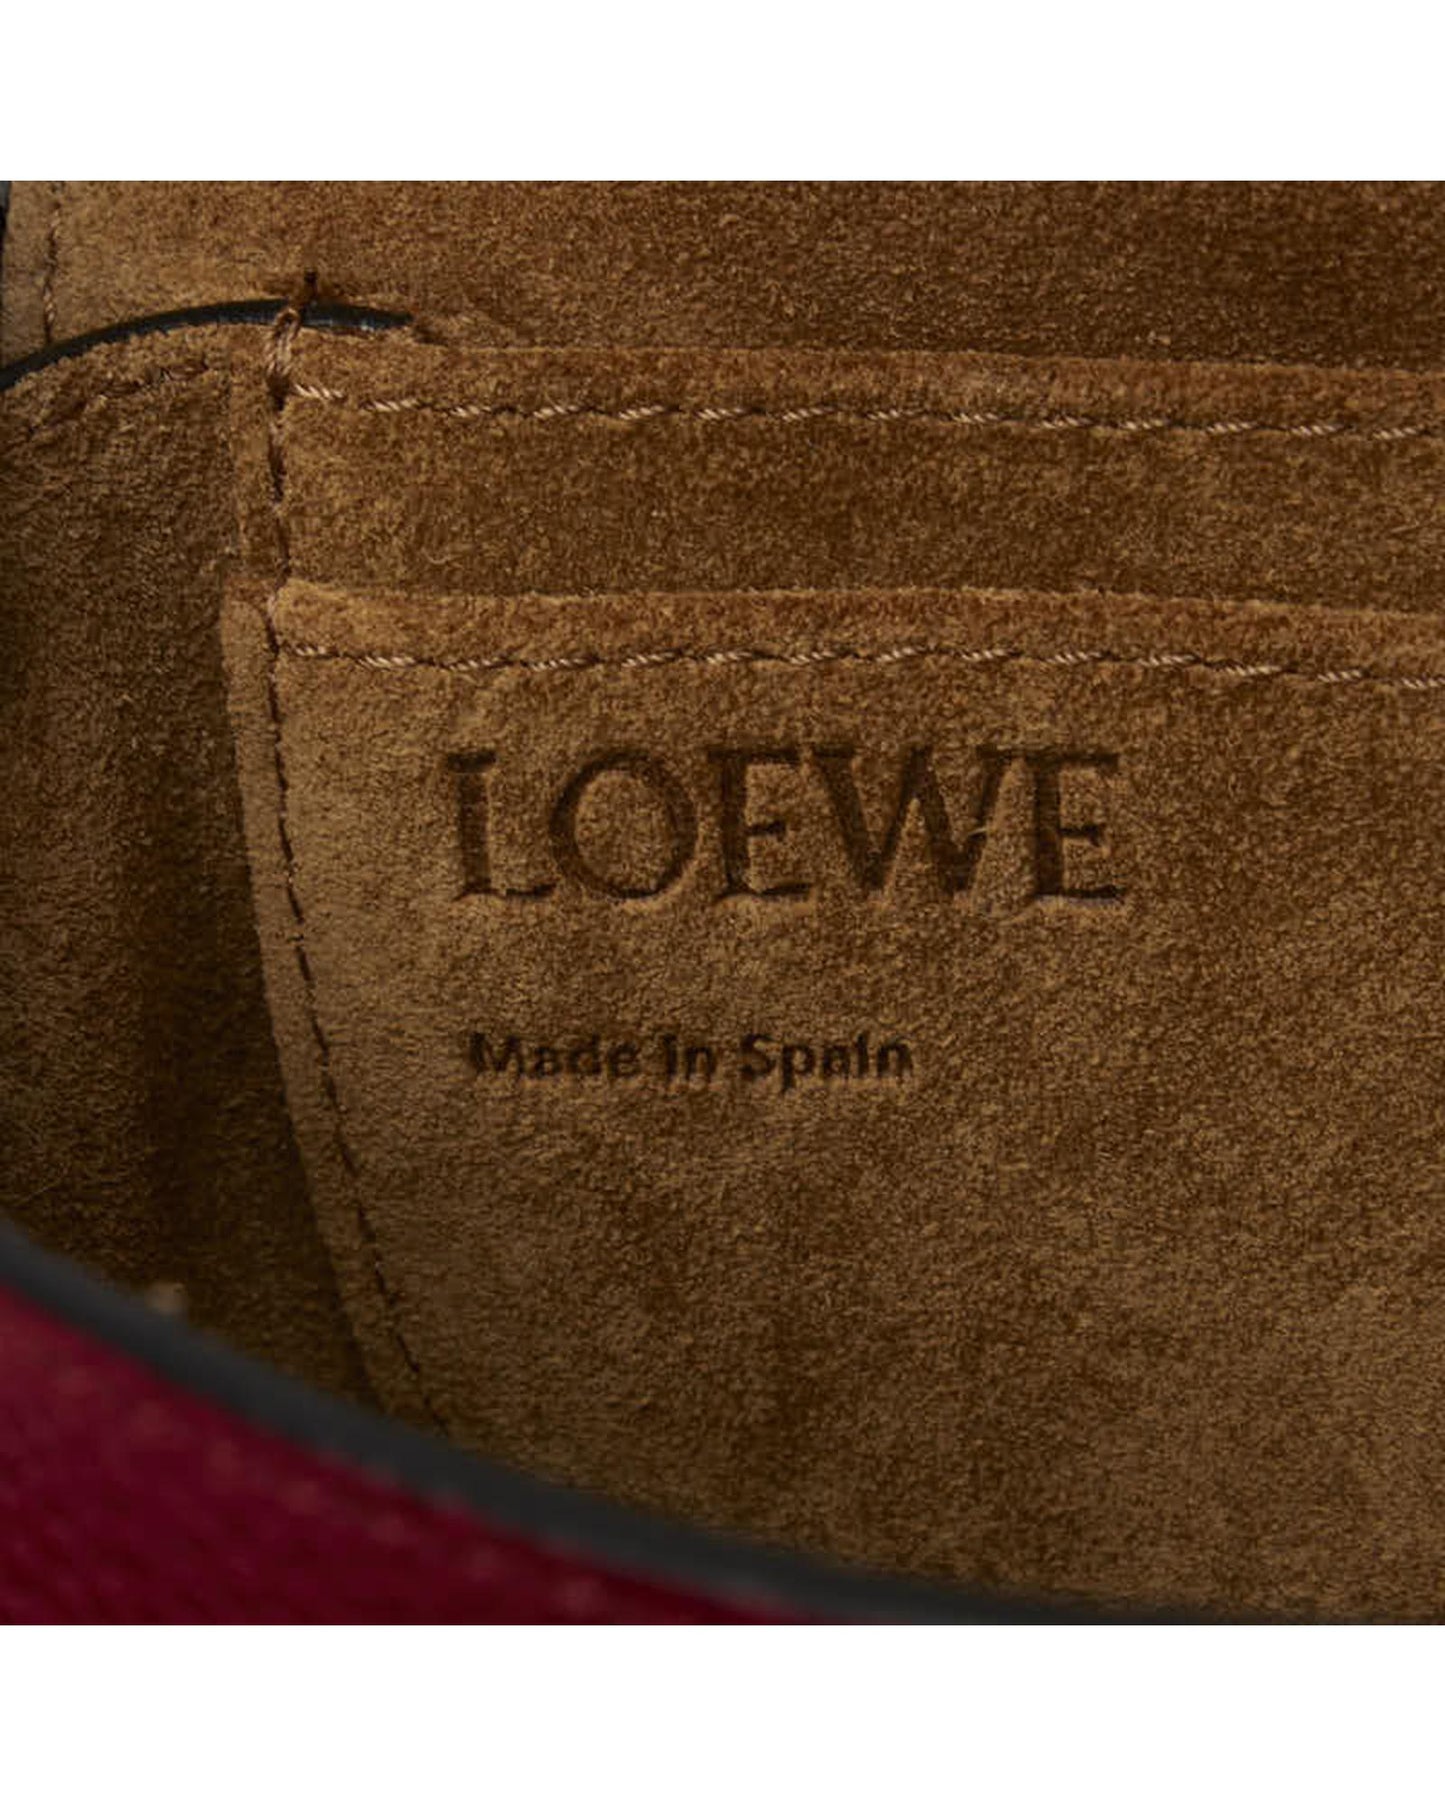 Loewe Men's Mini Leather Belt Bag in Red in Red